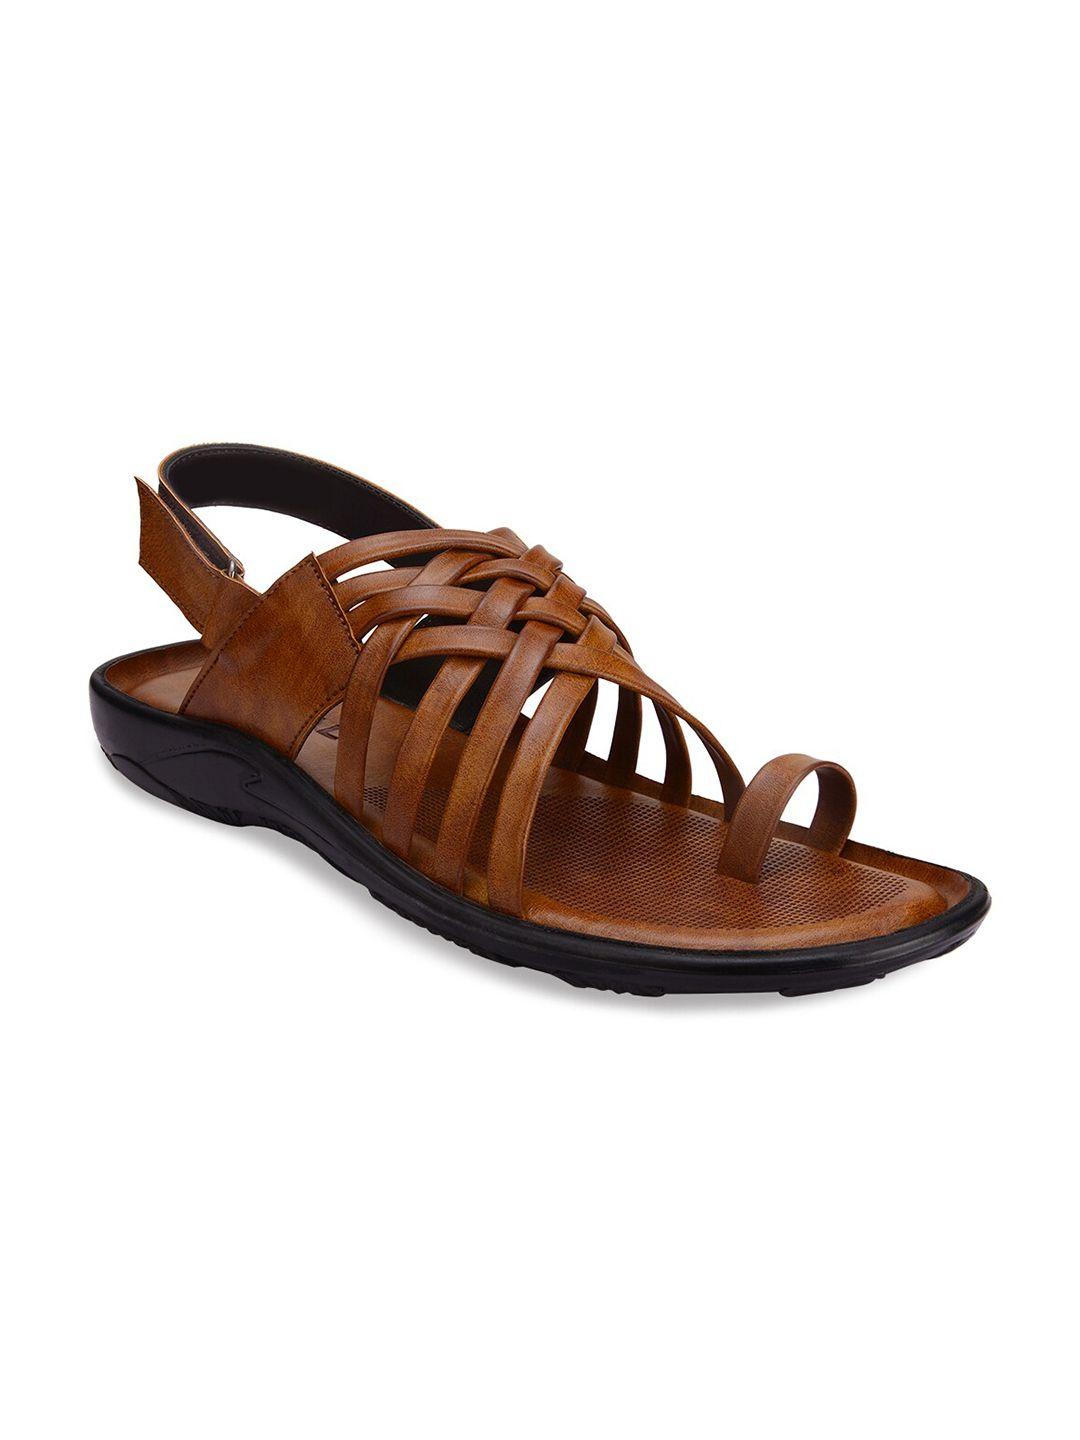 regal-men-leather-comfort-sandals